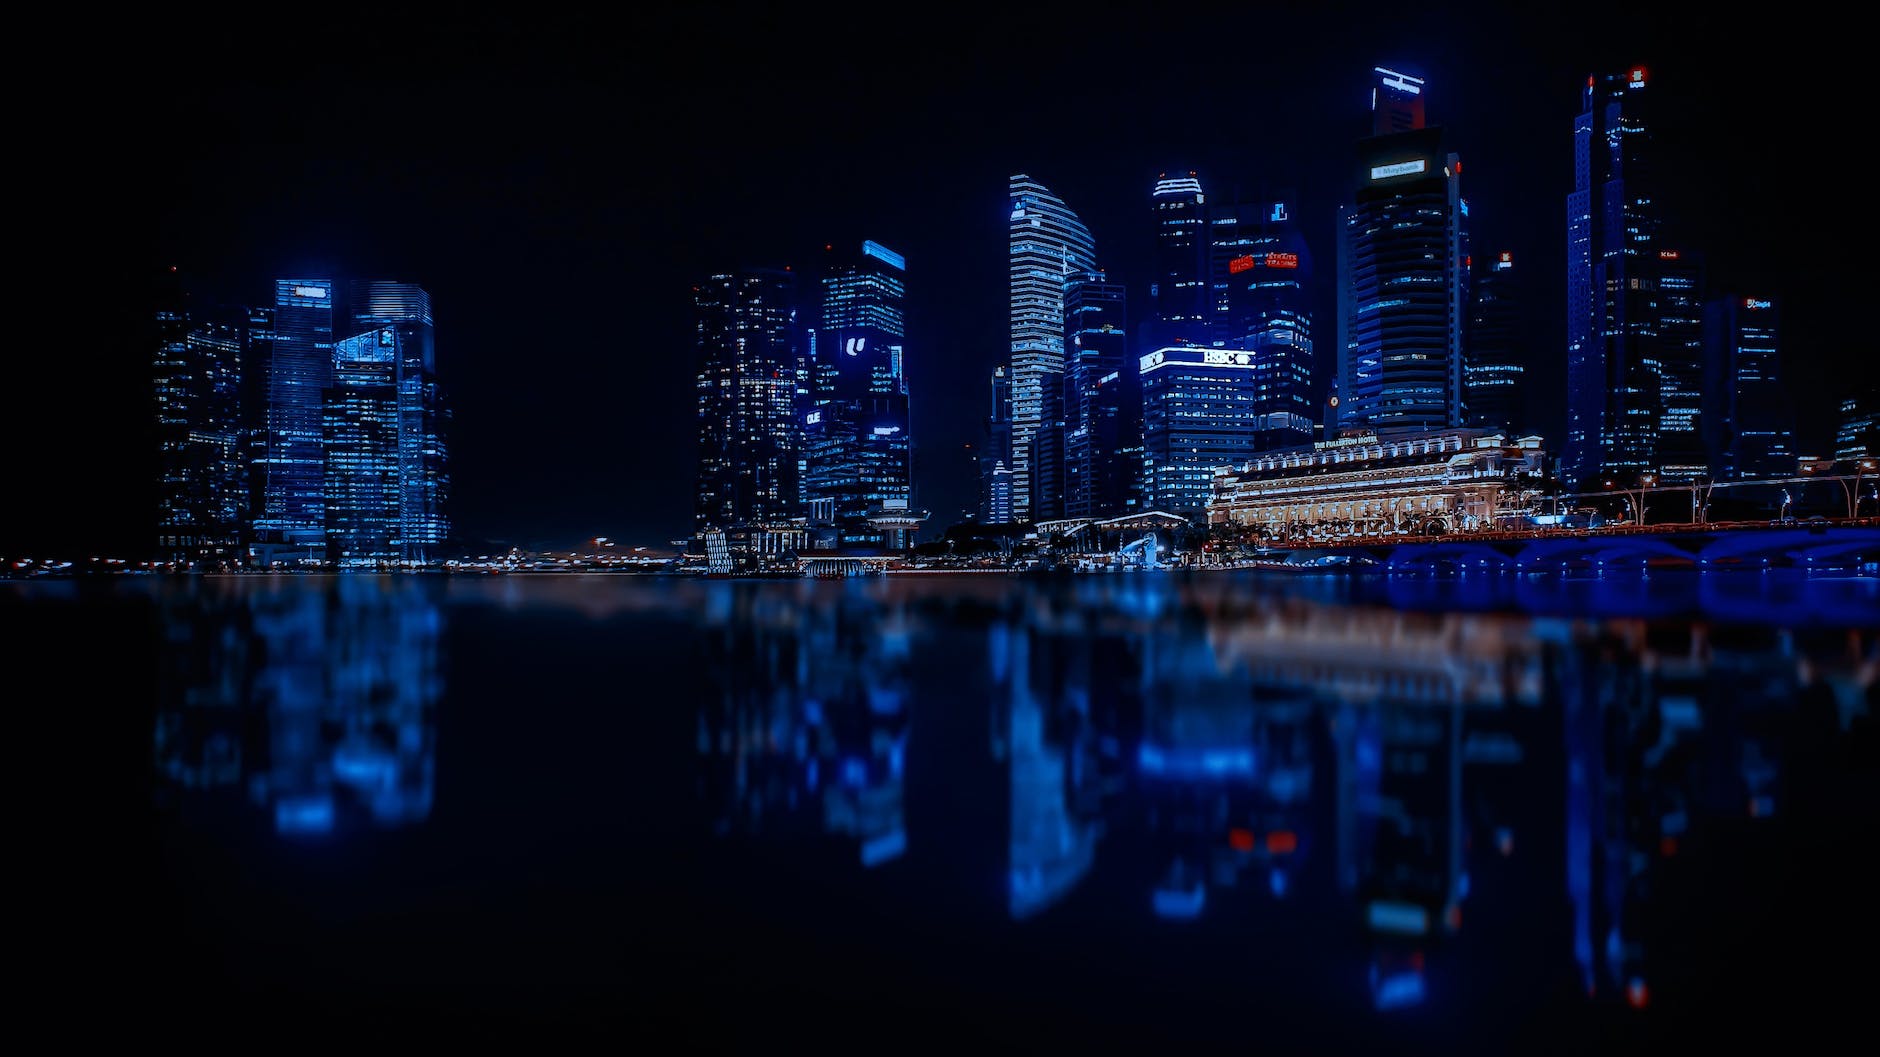 Illuminated Cityscape Against Blue Sky at Night